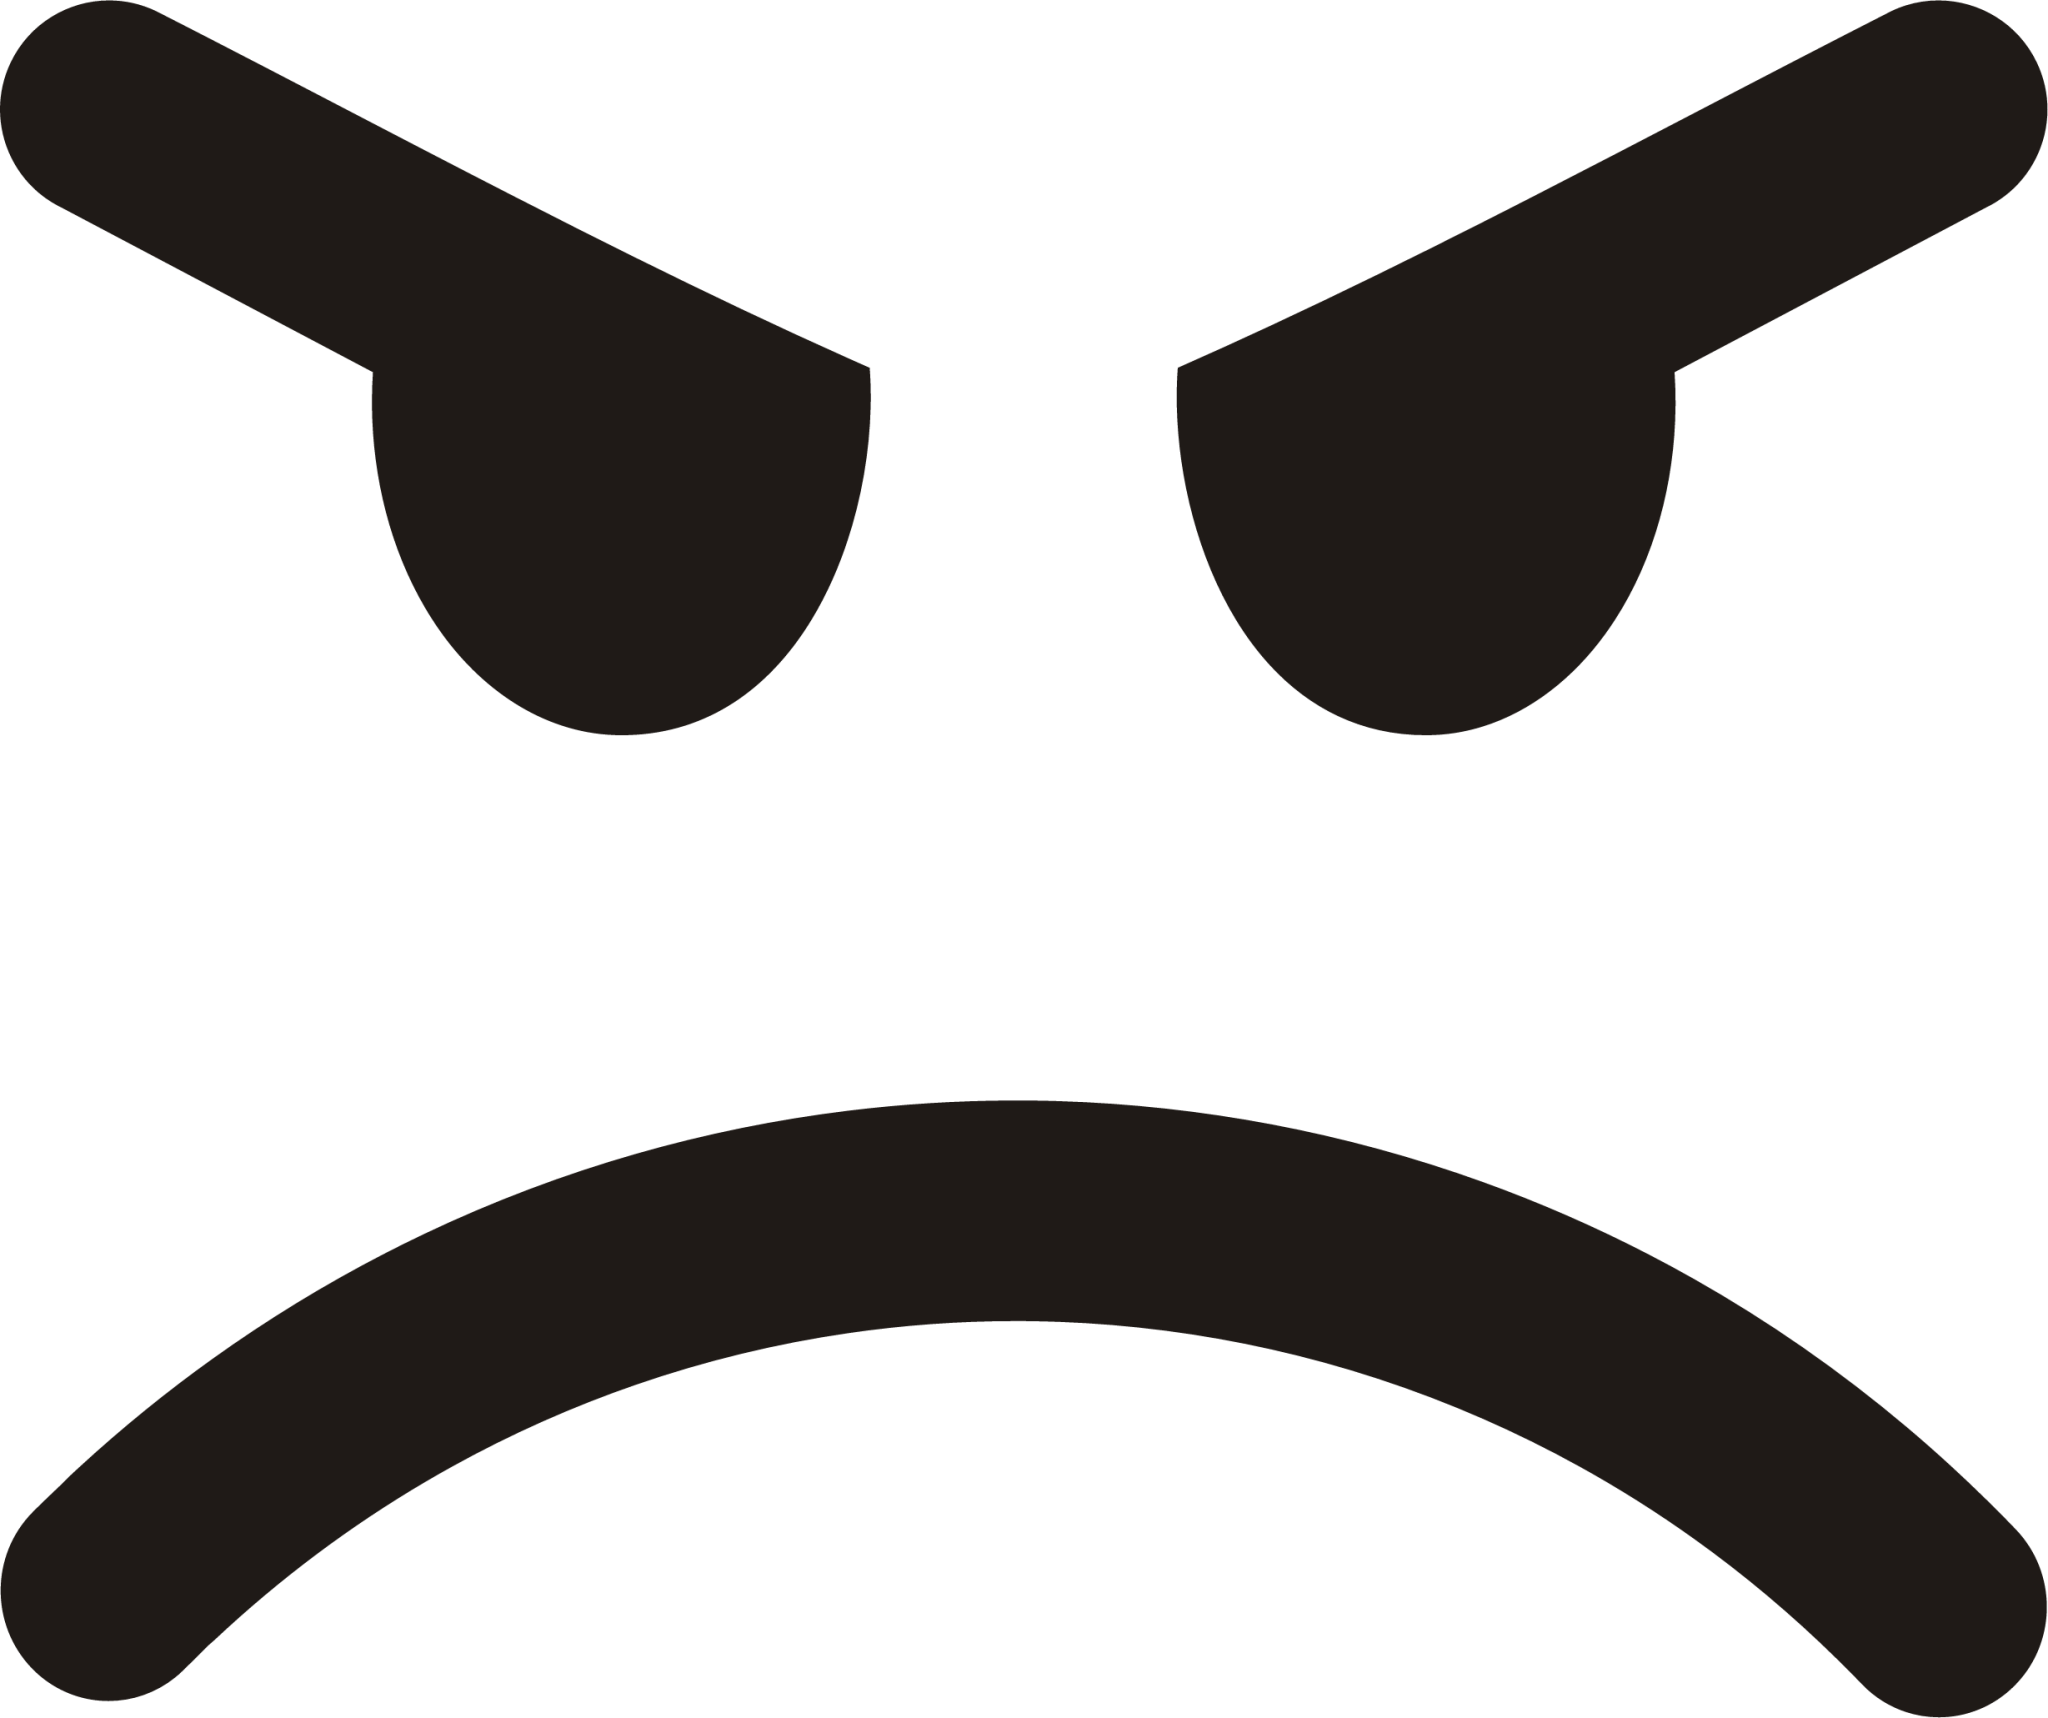 emo angry icon